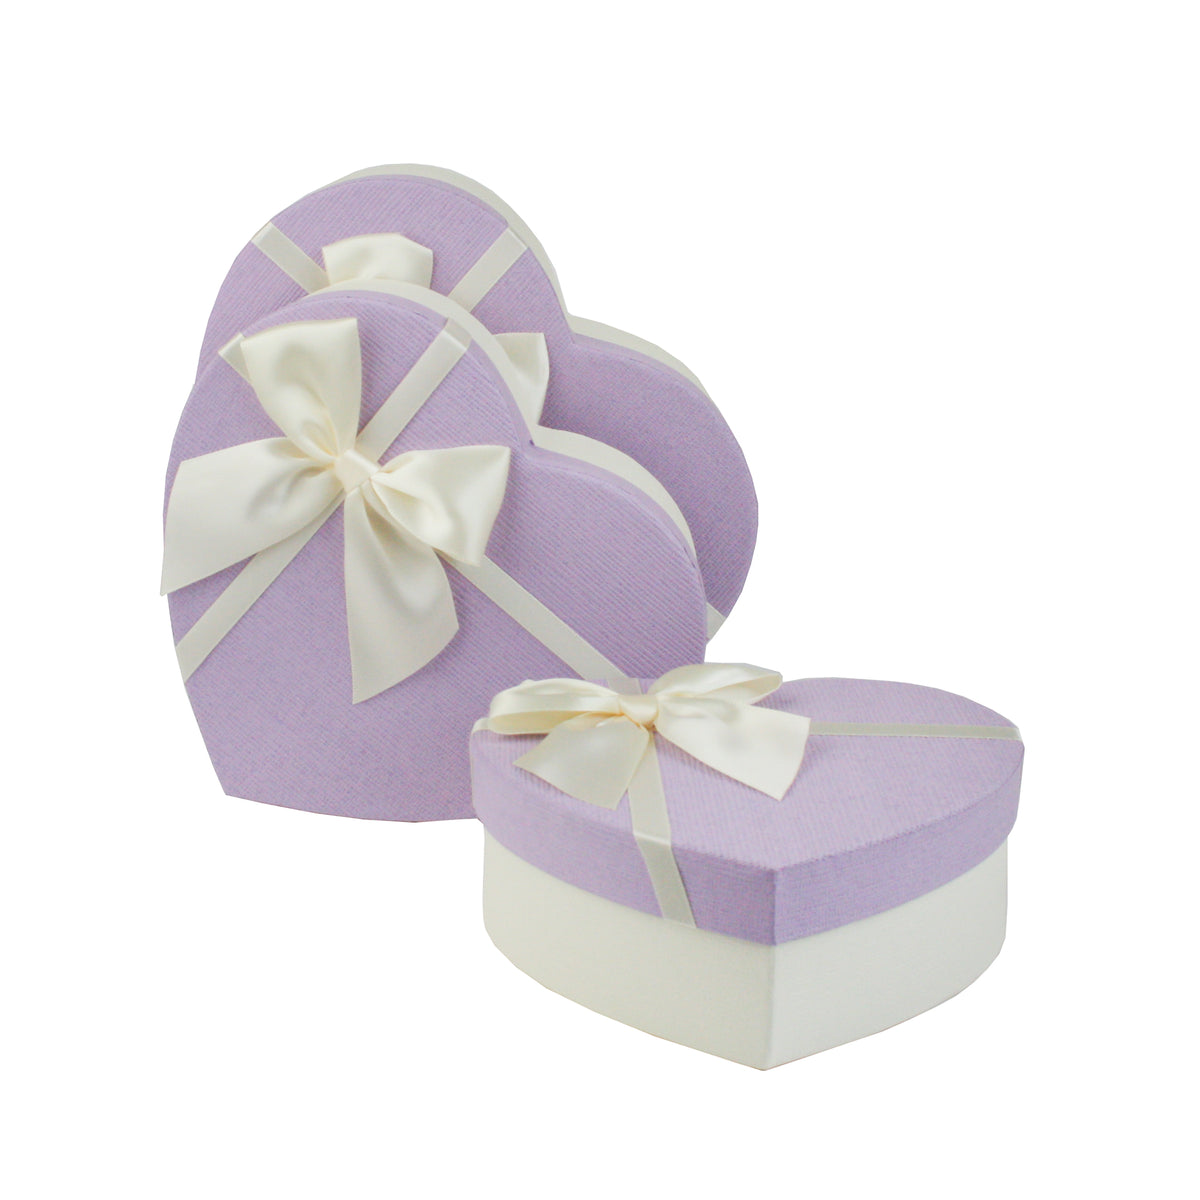 Set of 3 Heart White/Lilac Gift Boxes With White Satin Ribbon